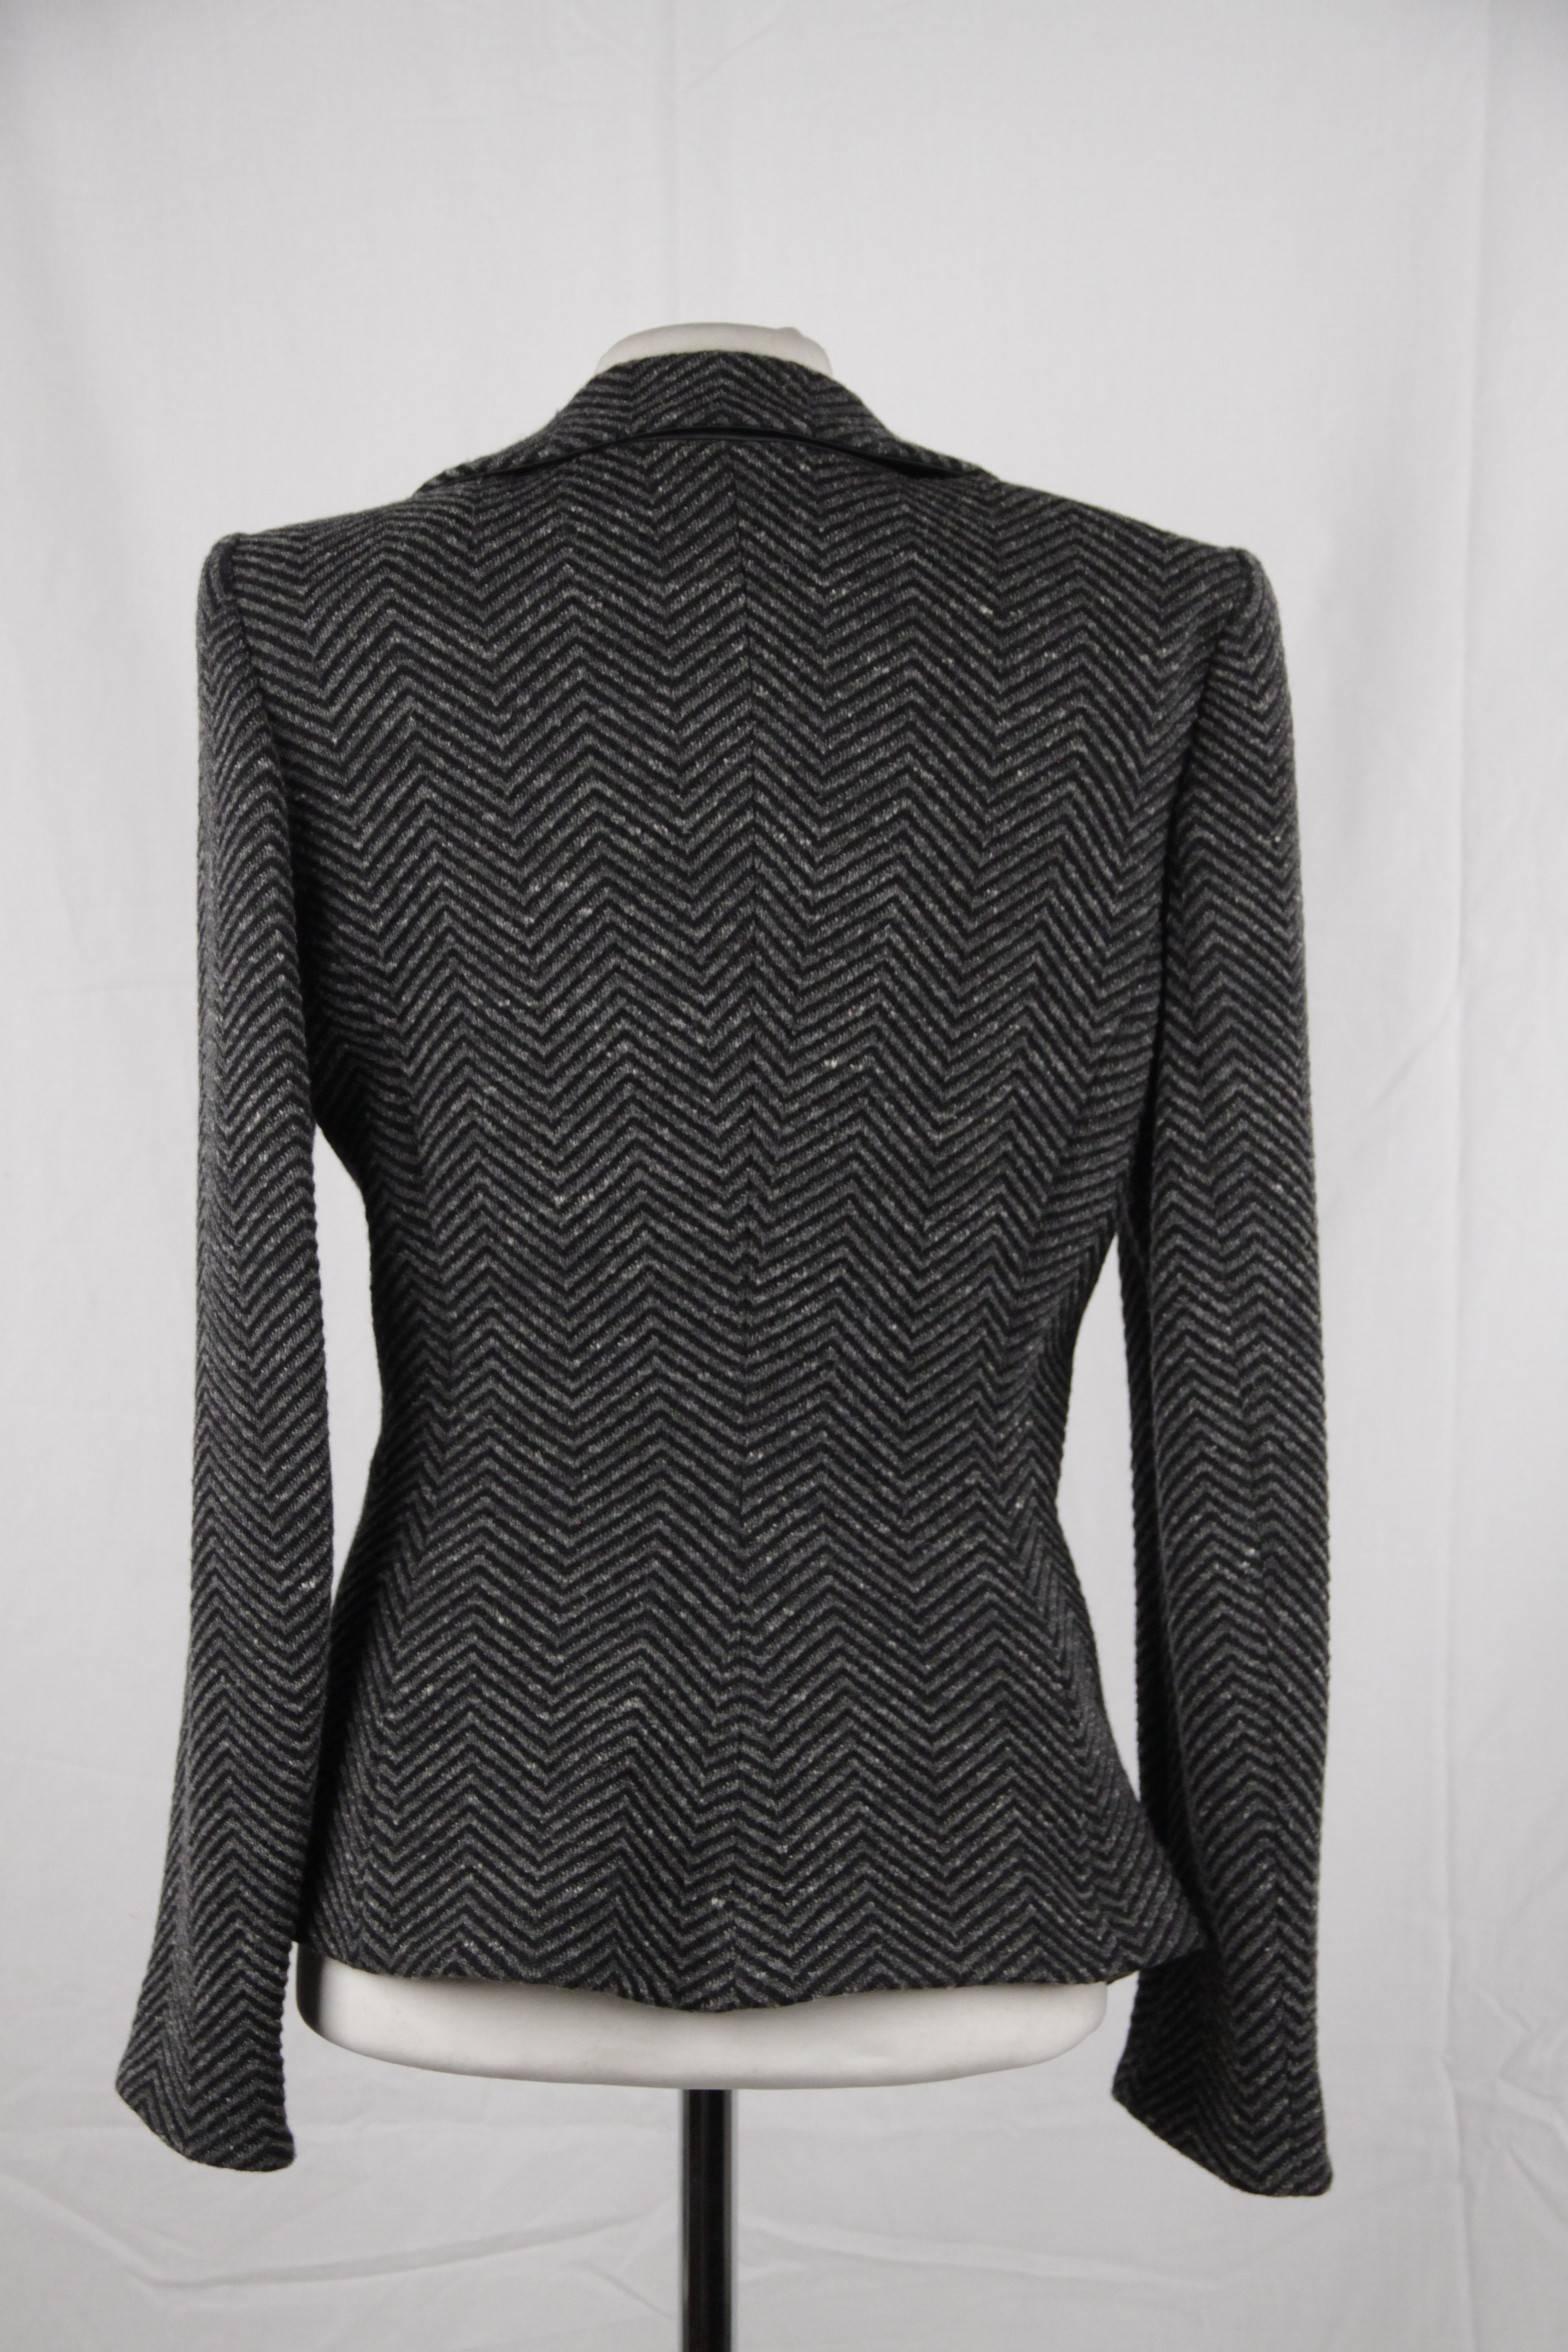 ARMANI COLLEZIONI Gray Textured Wool Blend BLAZER Jacket w/ DRAPING Size 44 1